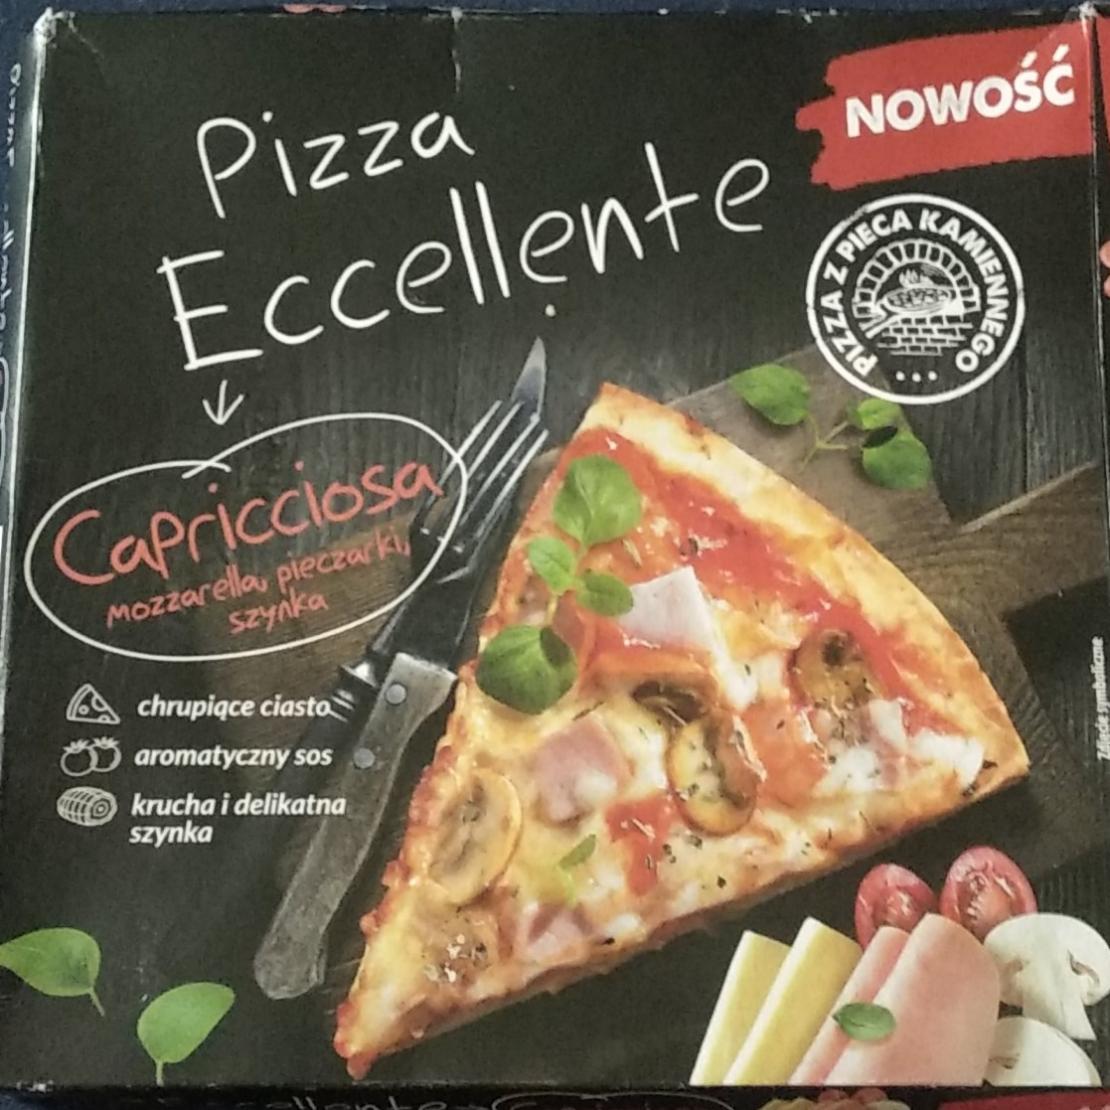 Zdjęcia - Capricciosa Pizza Eccellente Nowość